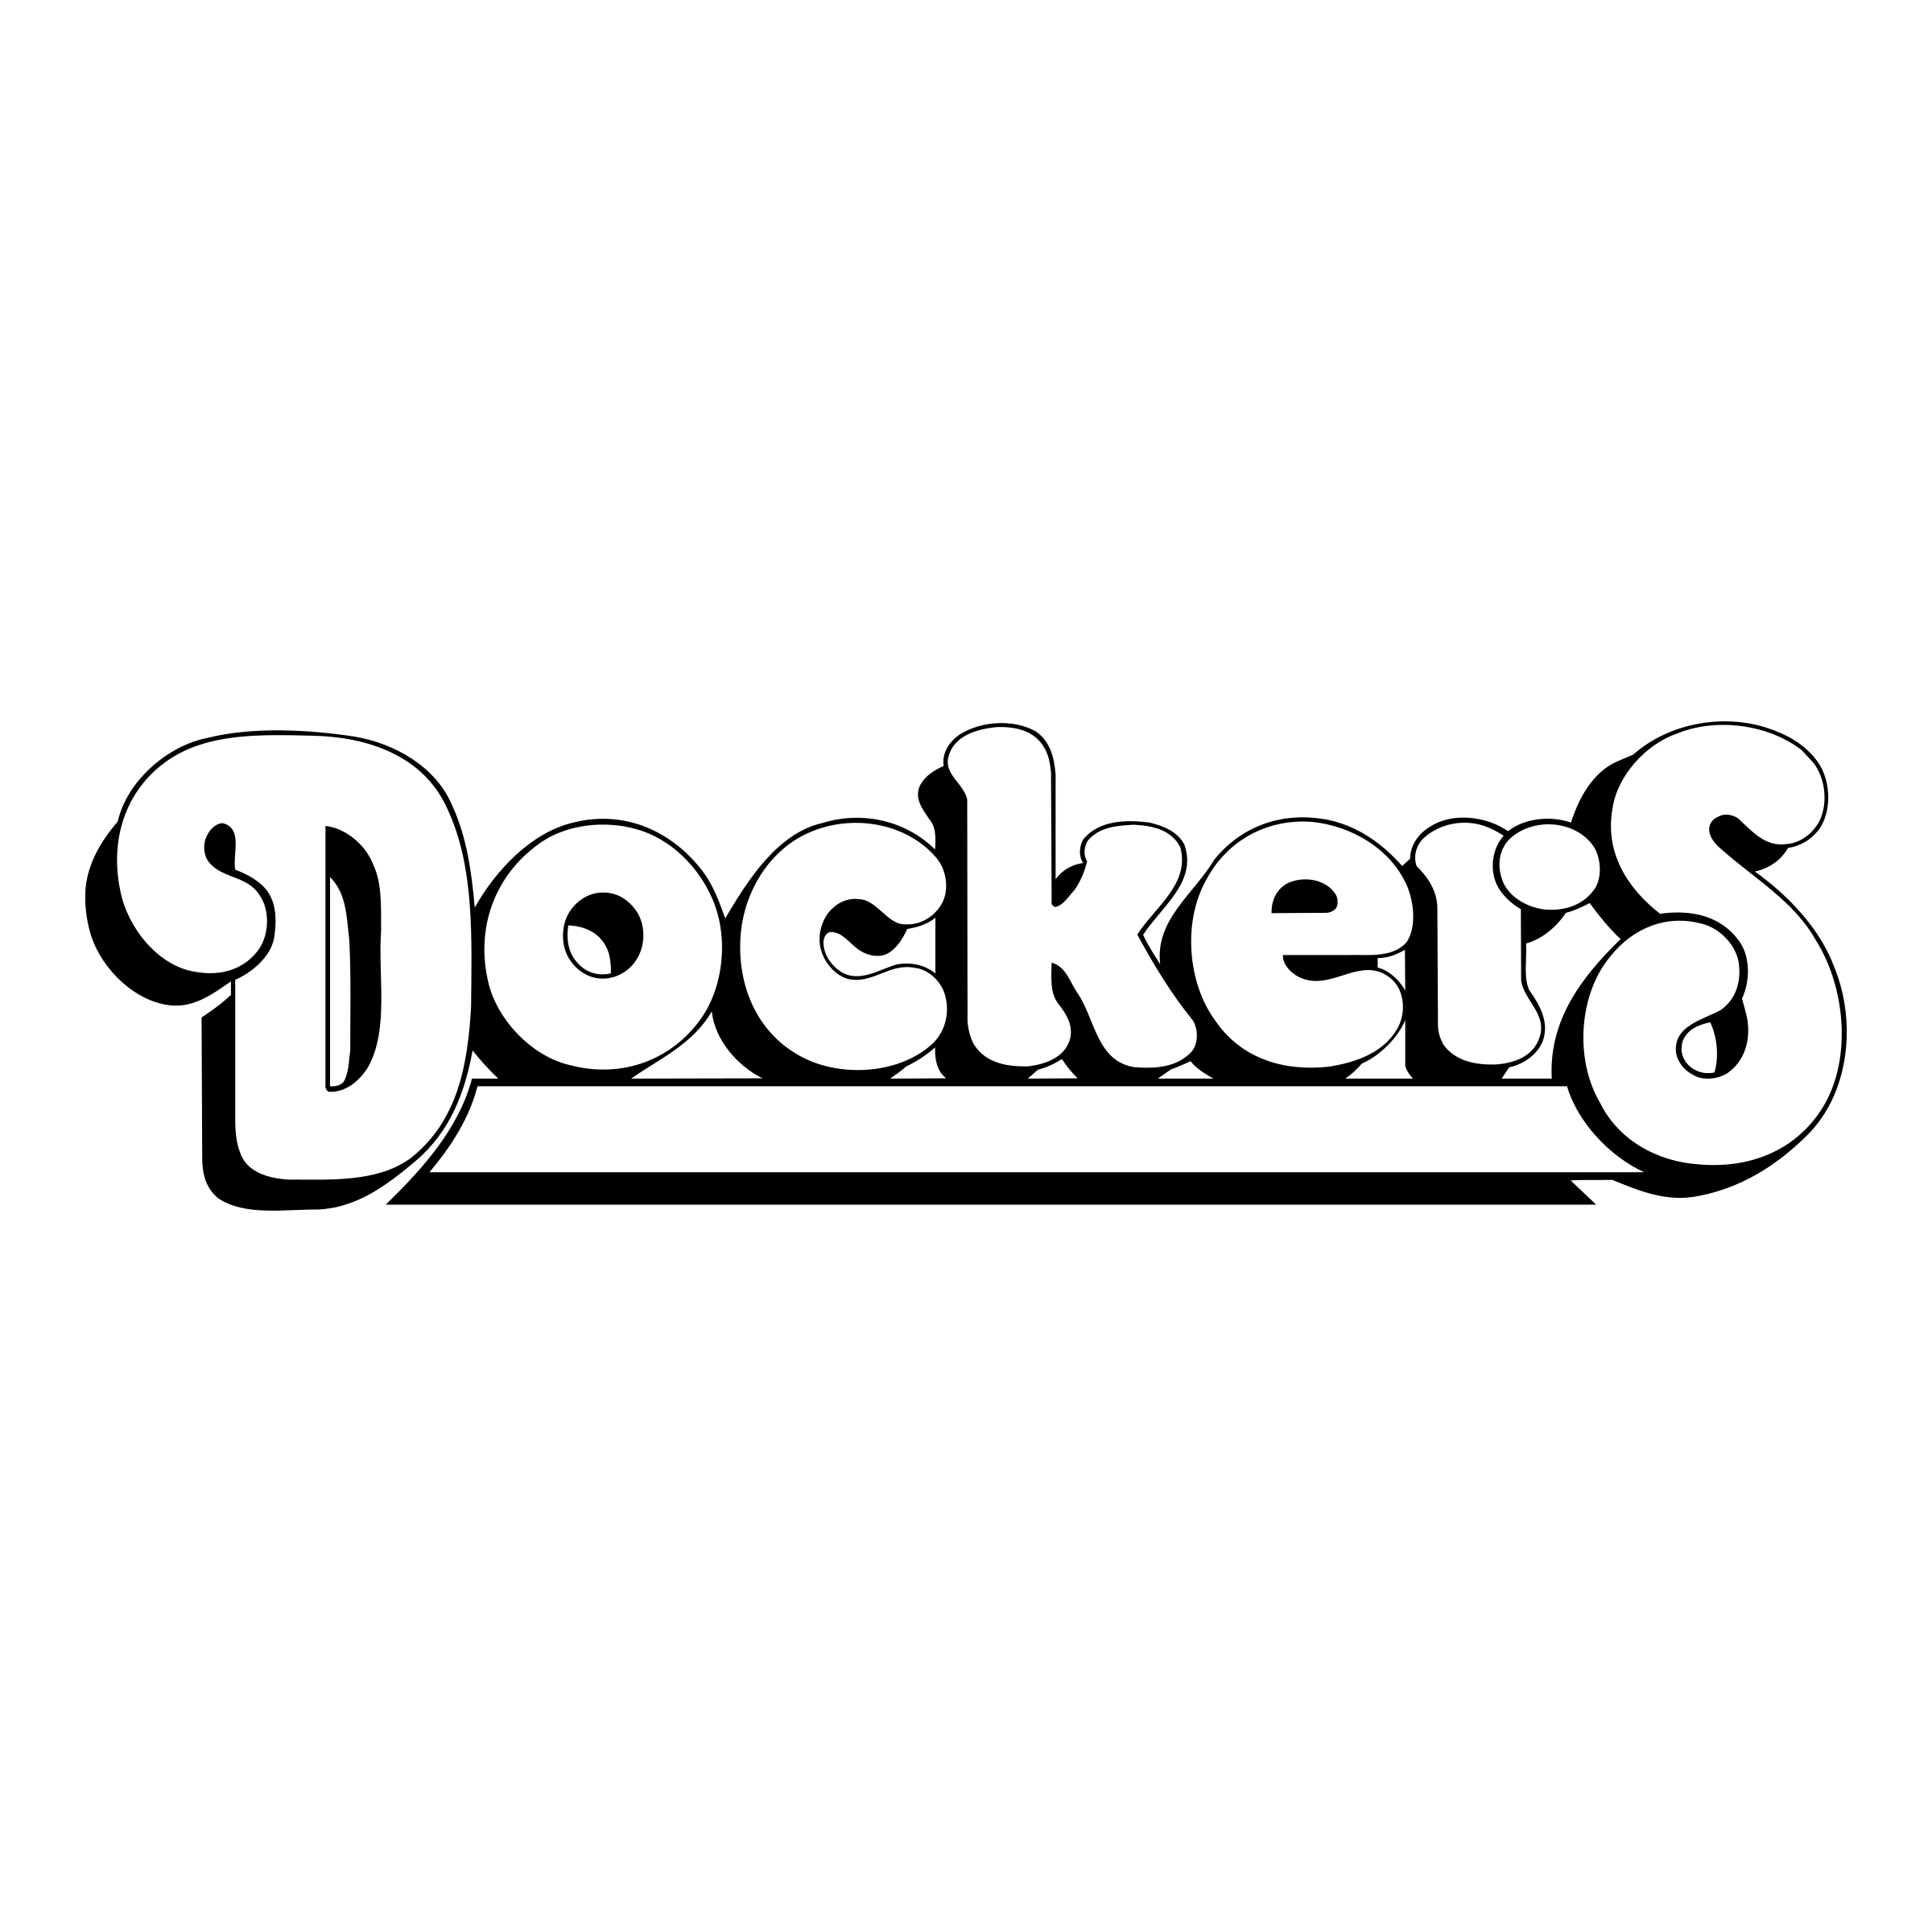 Dockers Logo - Dockers Logo PNG Transparent & SVG Vector - Freebie Supply